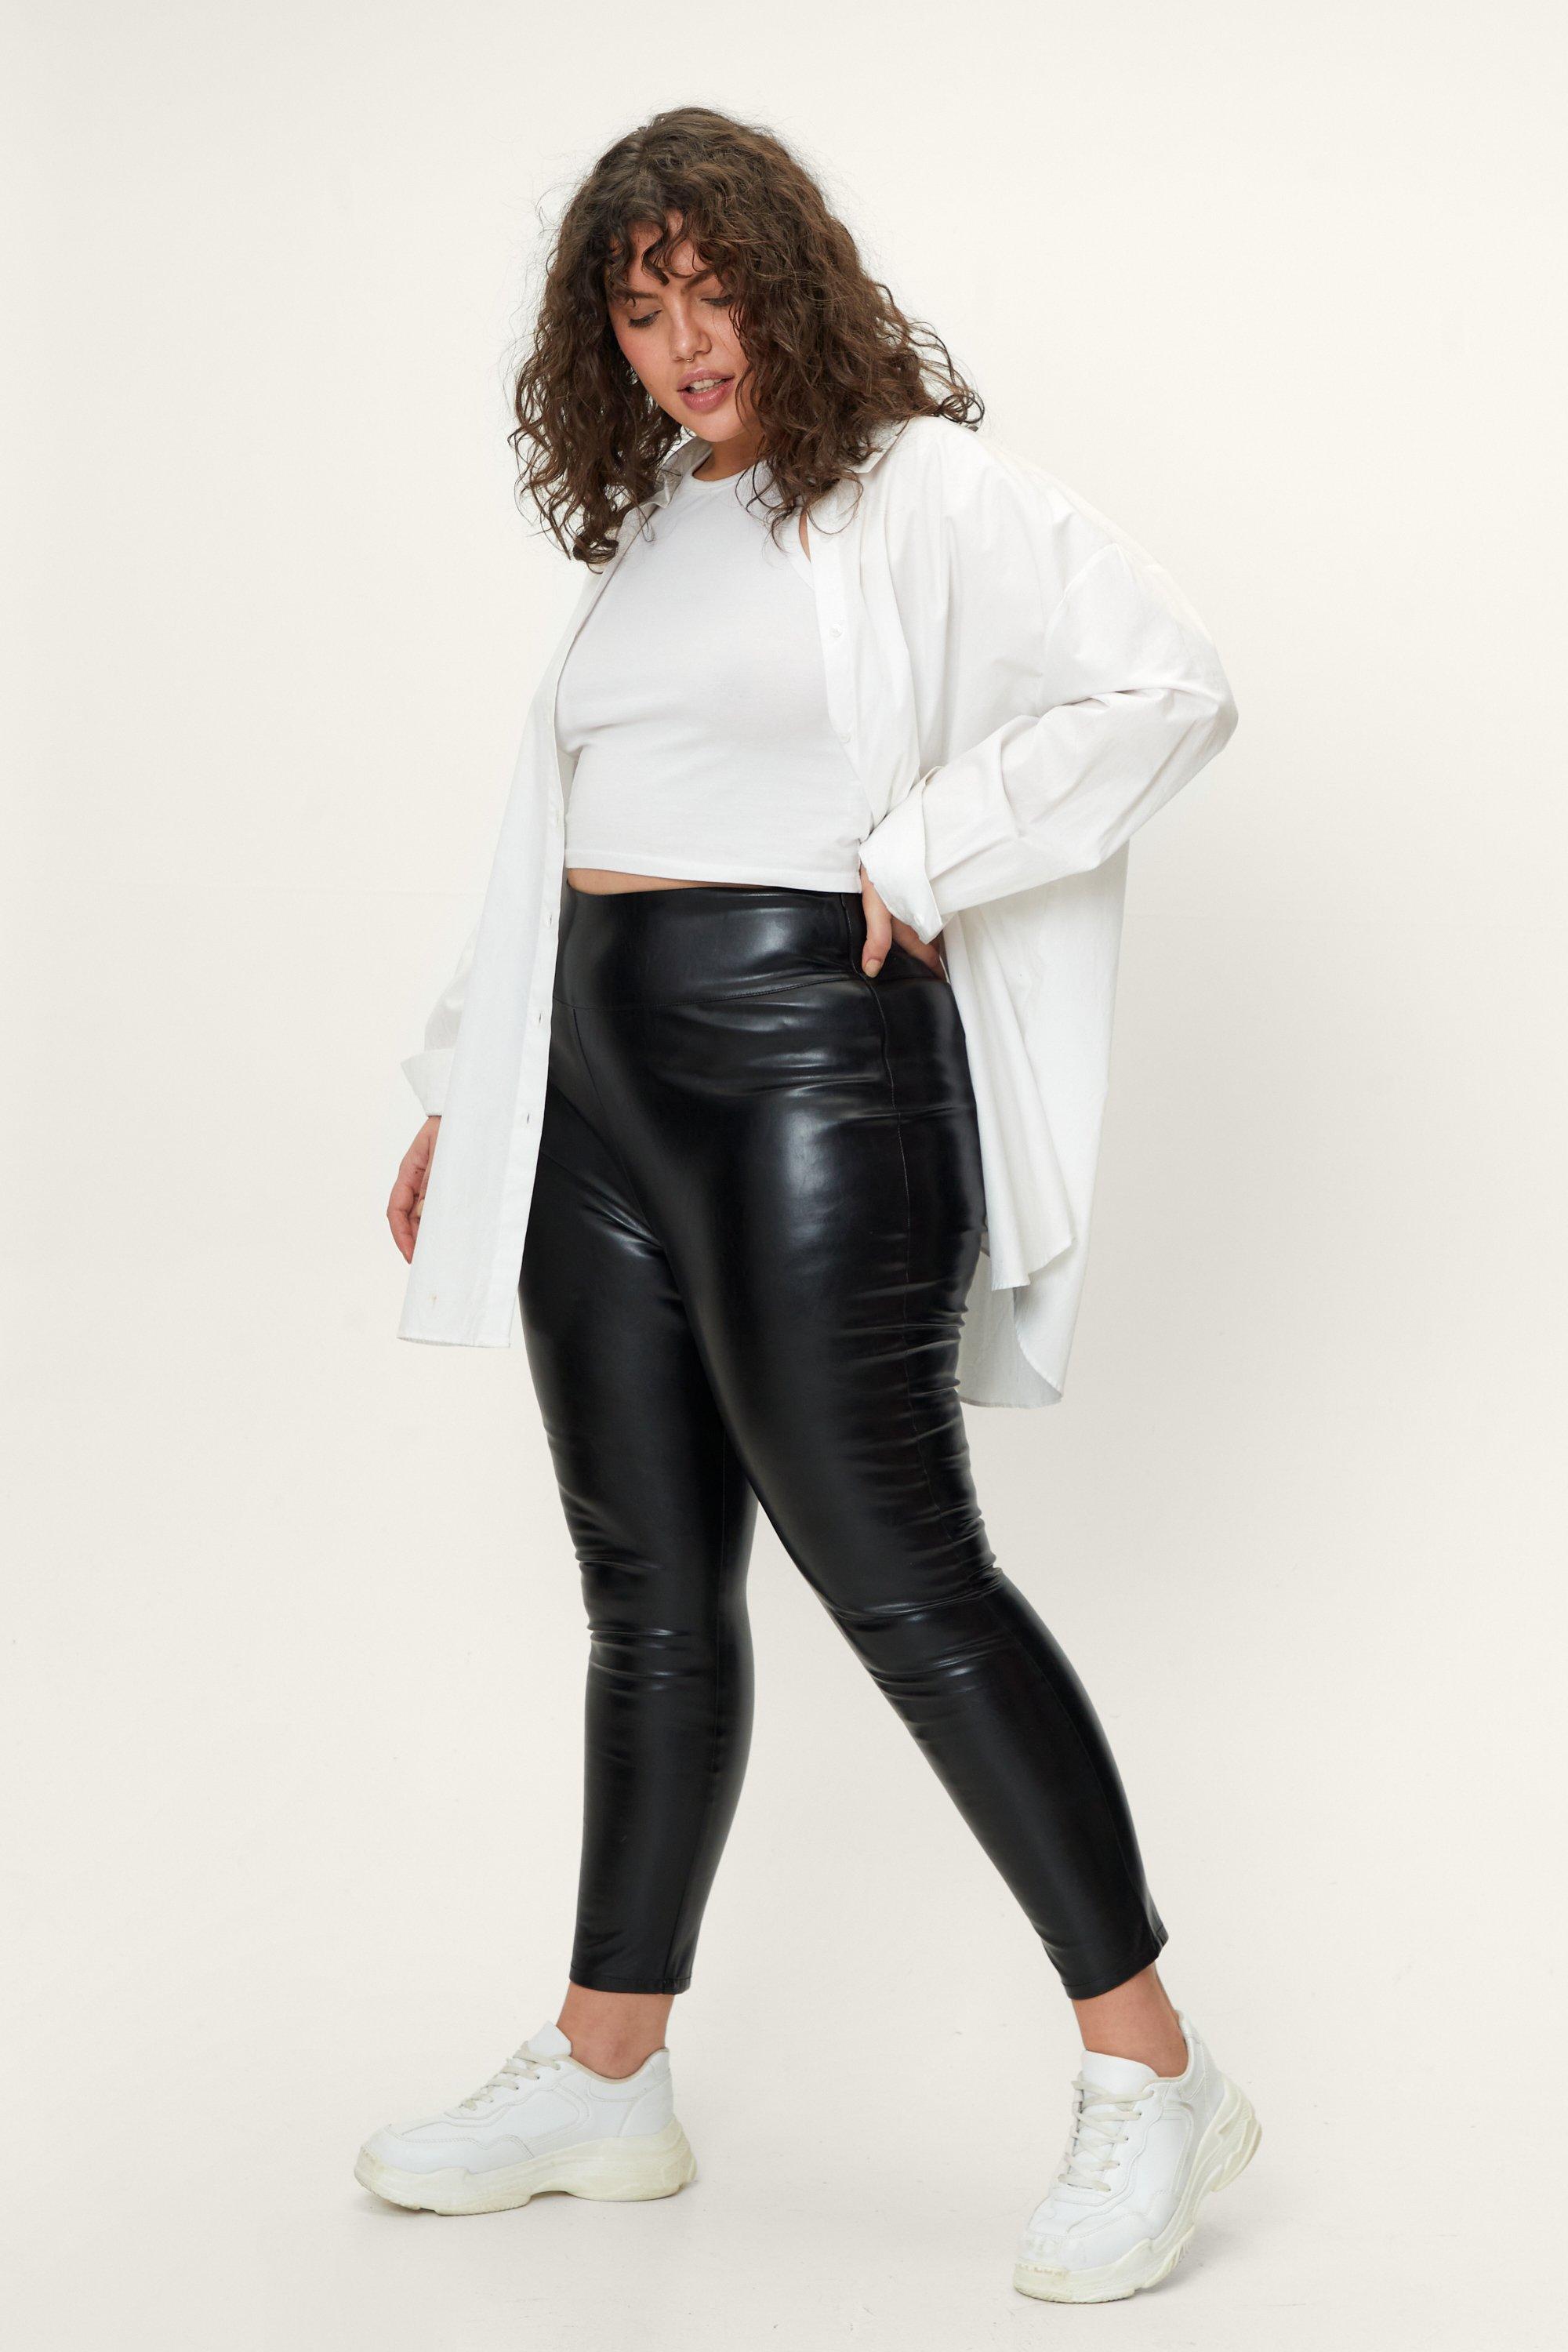 ASEIDFNSA Leather Pants Women Plus Size Tall Women Leather